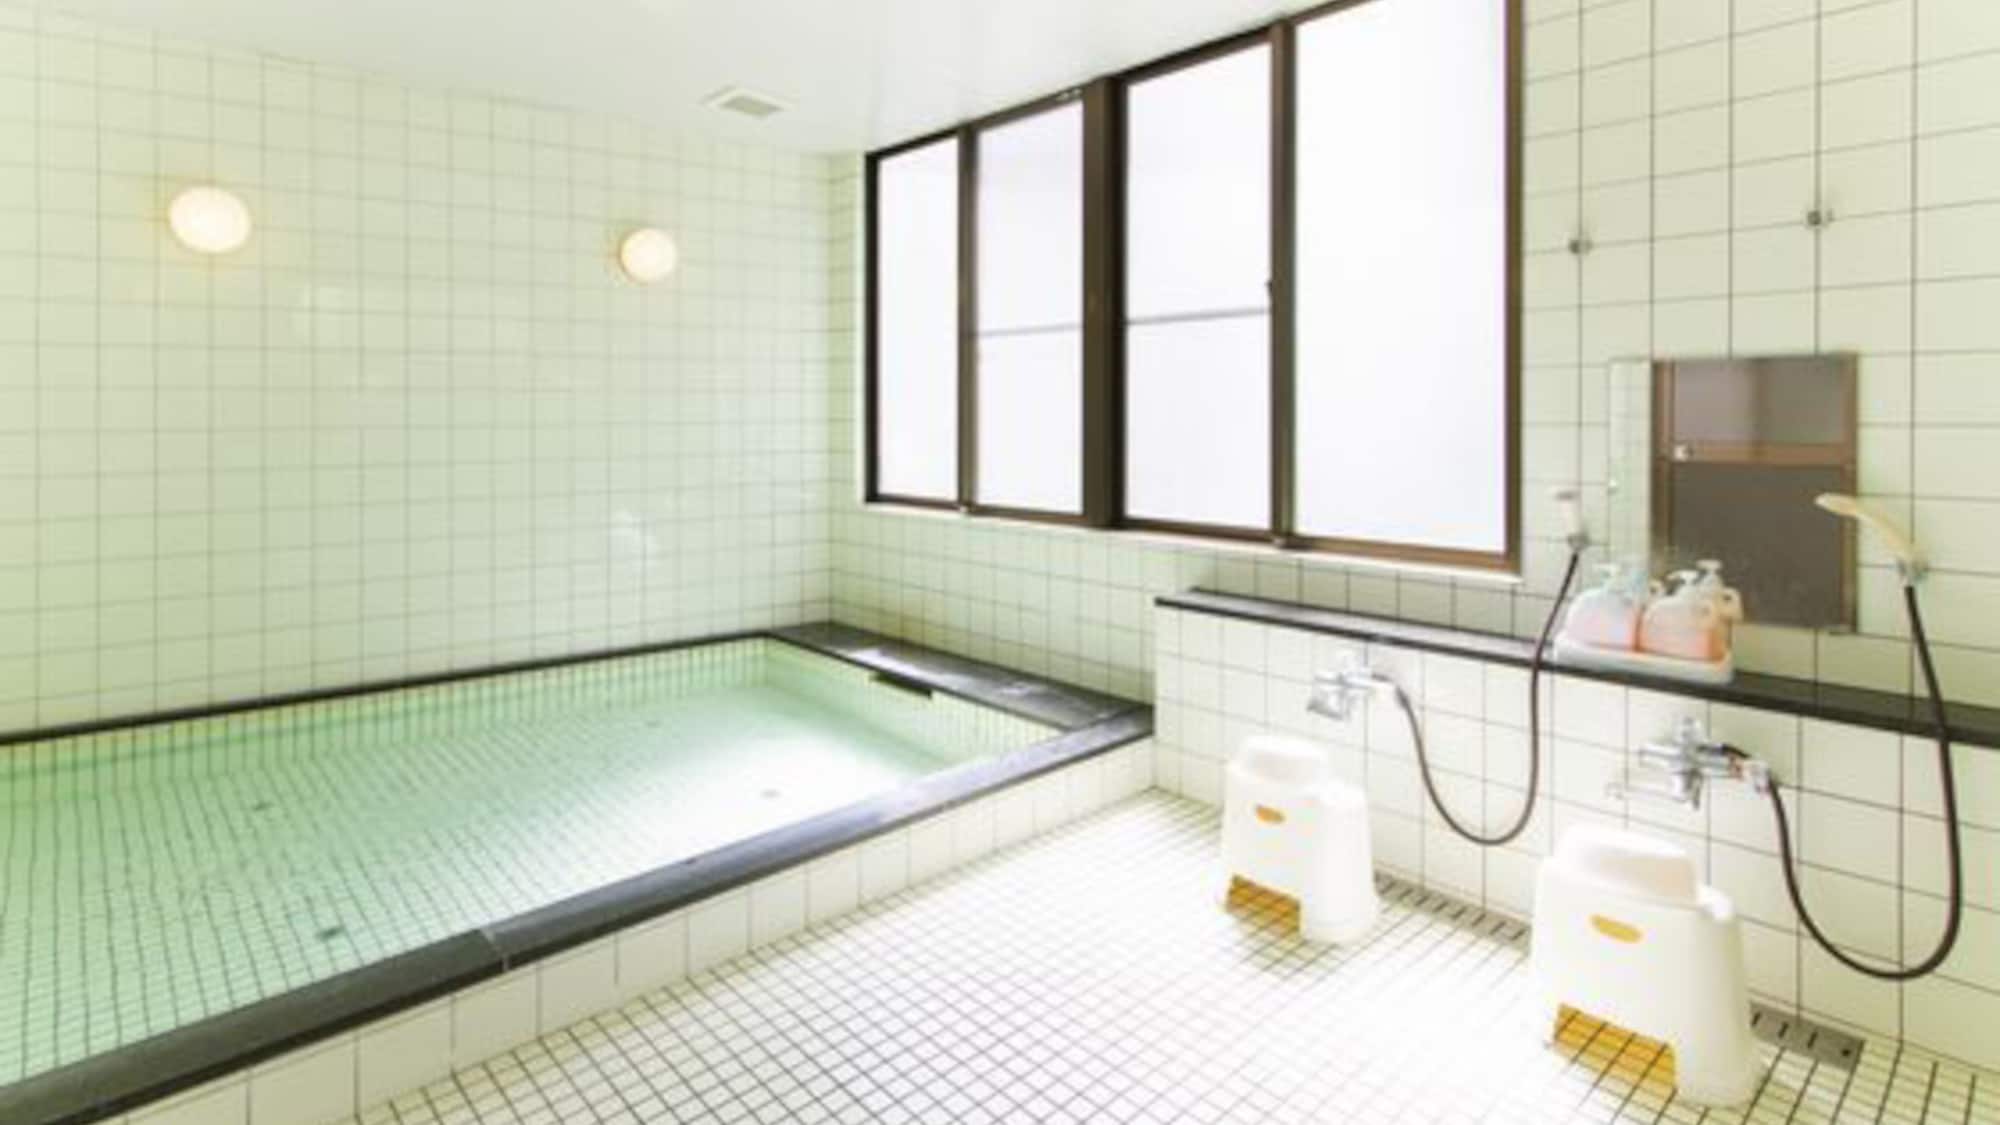 ・ Large communal bath / spacious and comfortable bath